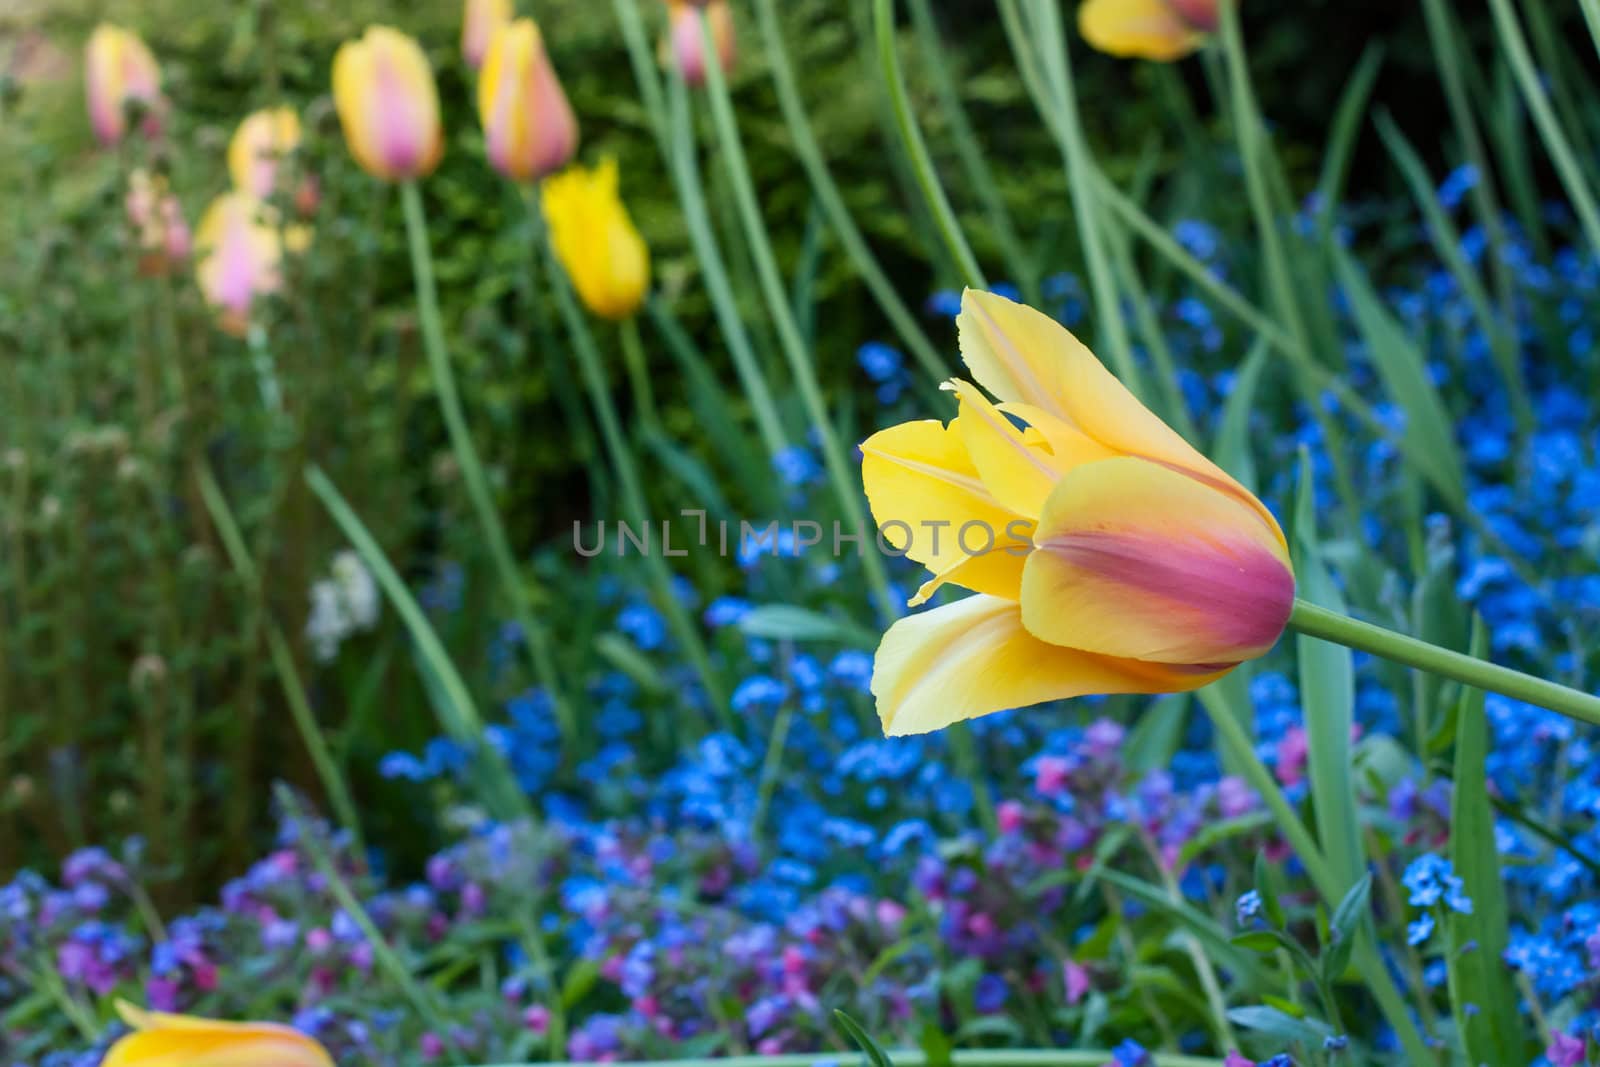 Tulips beauty by aleksan